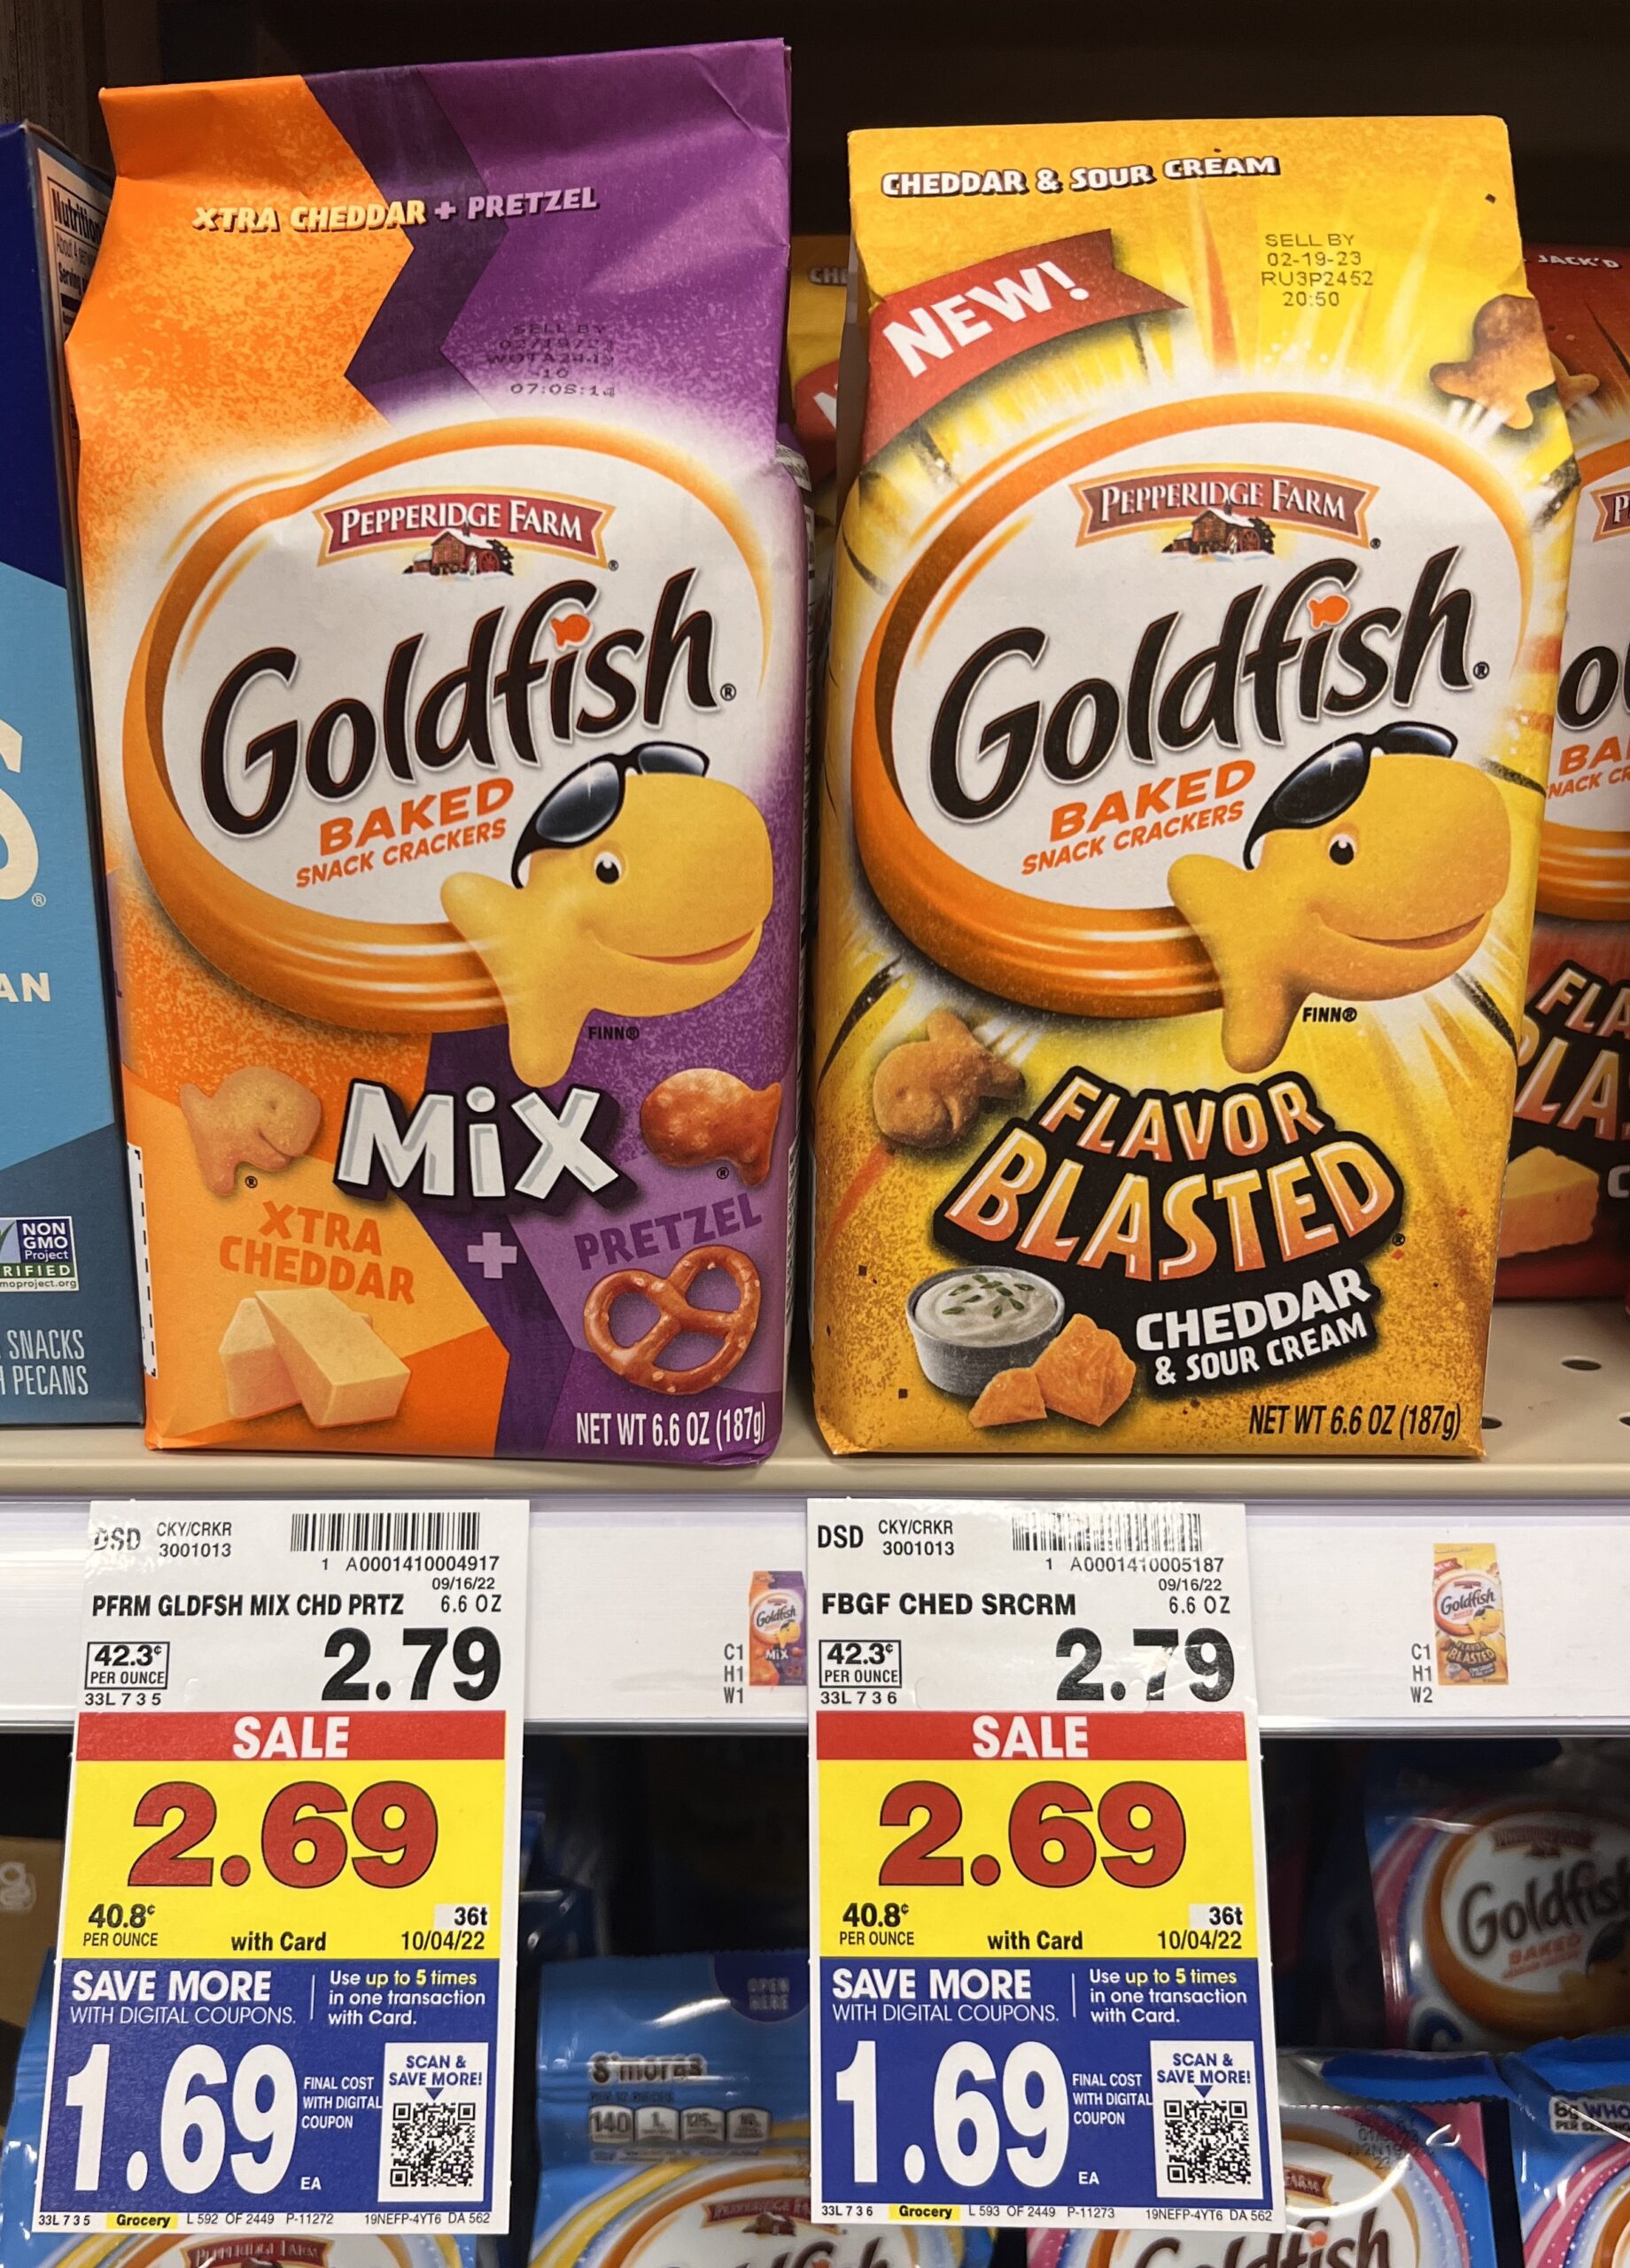 Goldfish Kroger Shelf Image_1